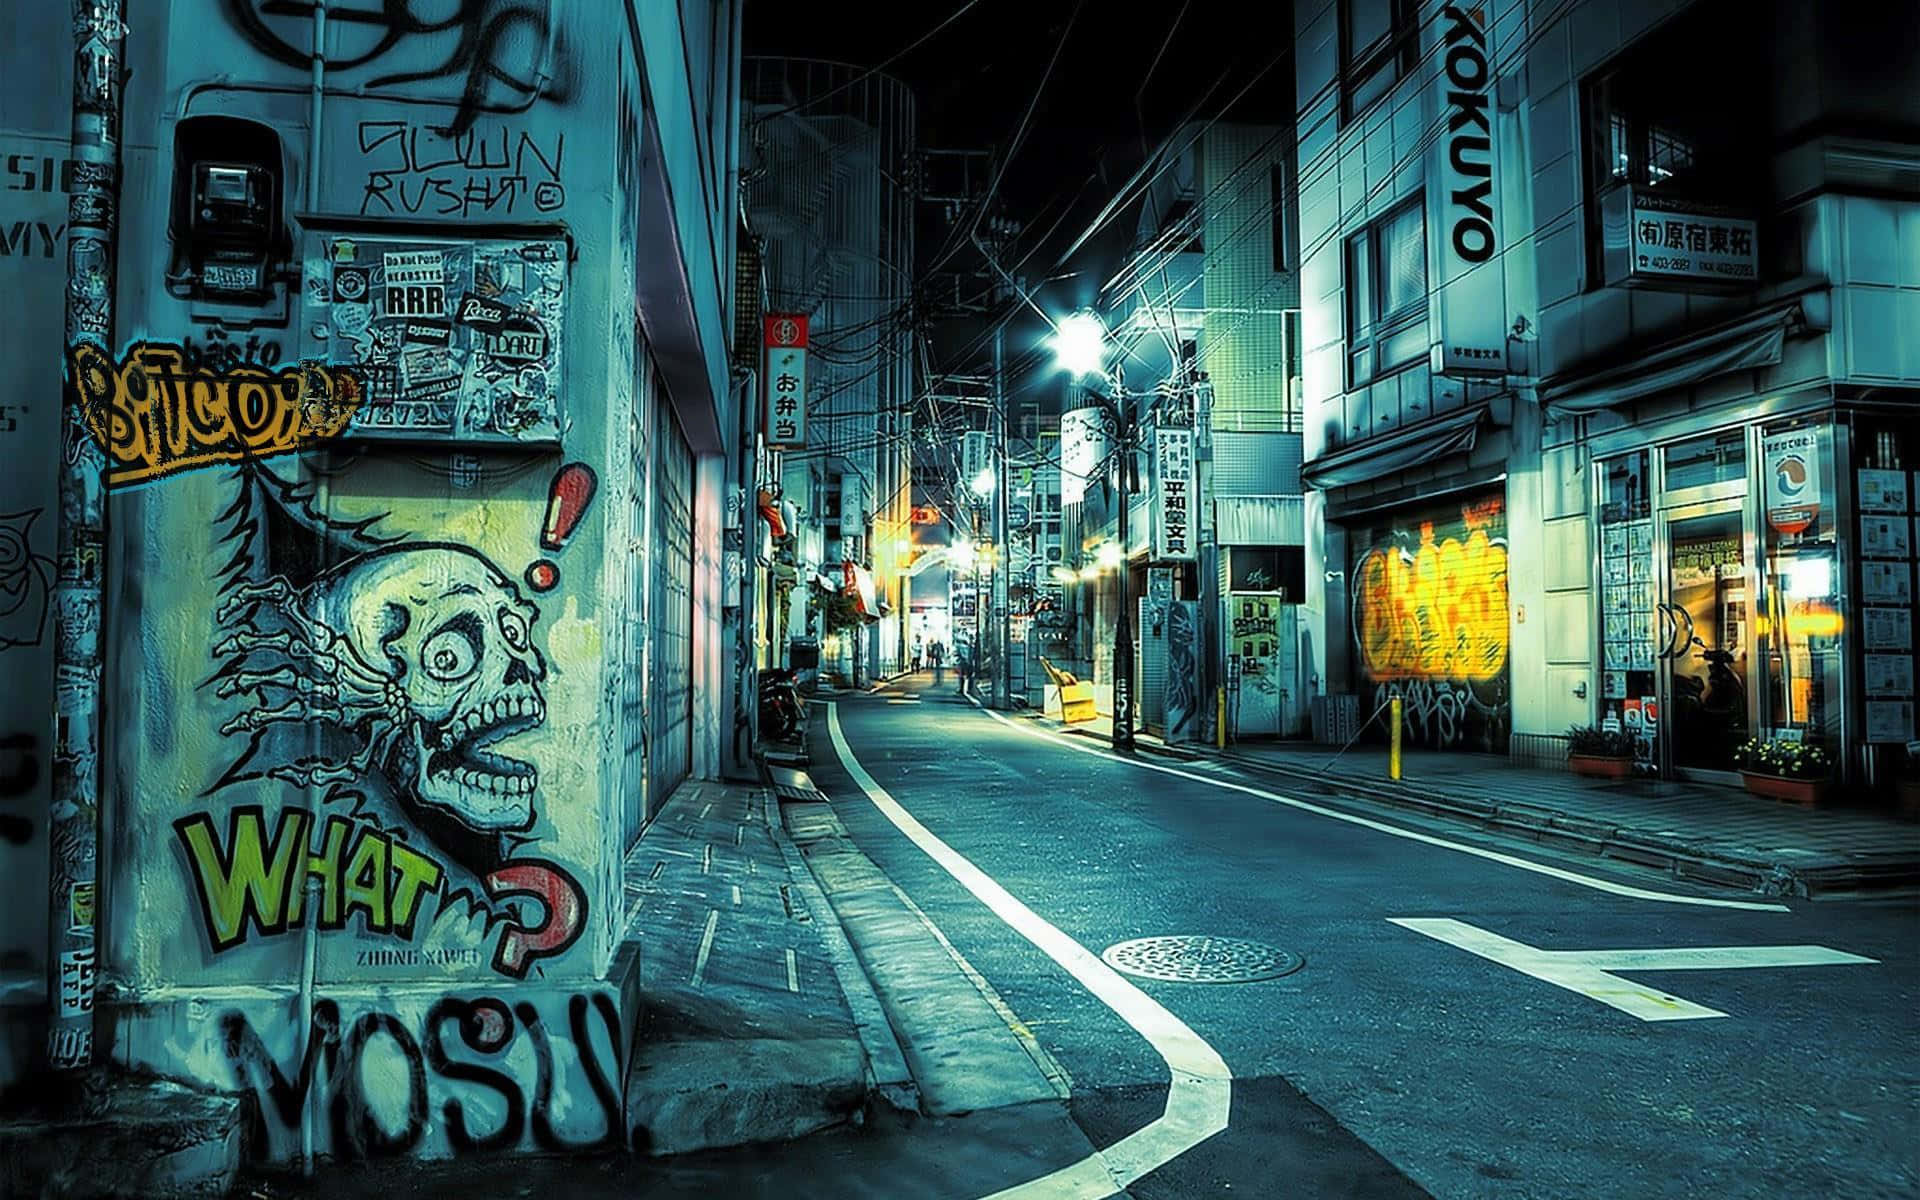 A Street With Graffiti